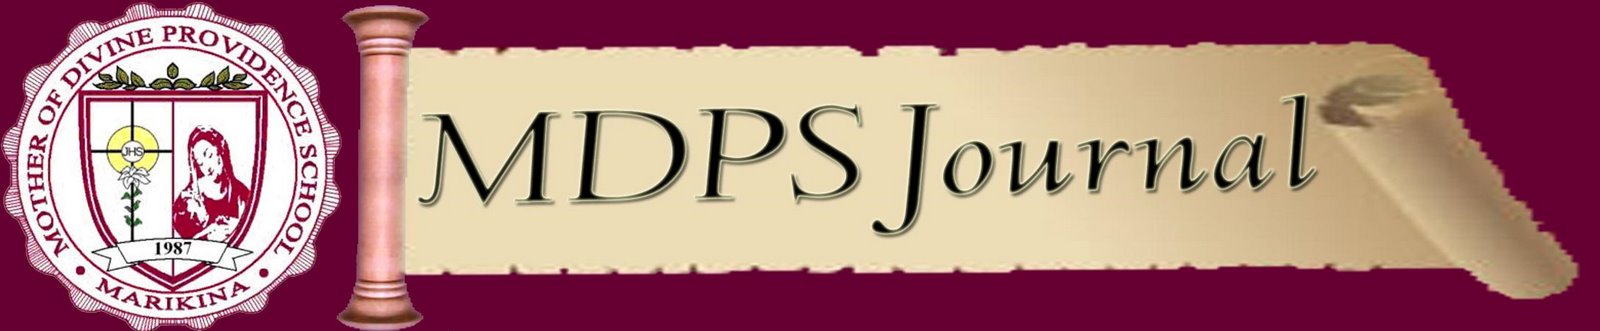 MDPS Journal